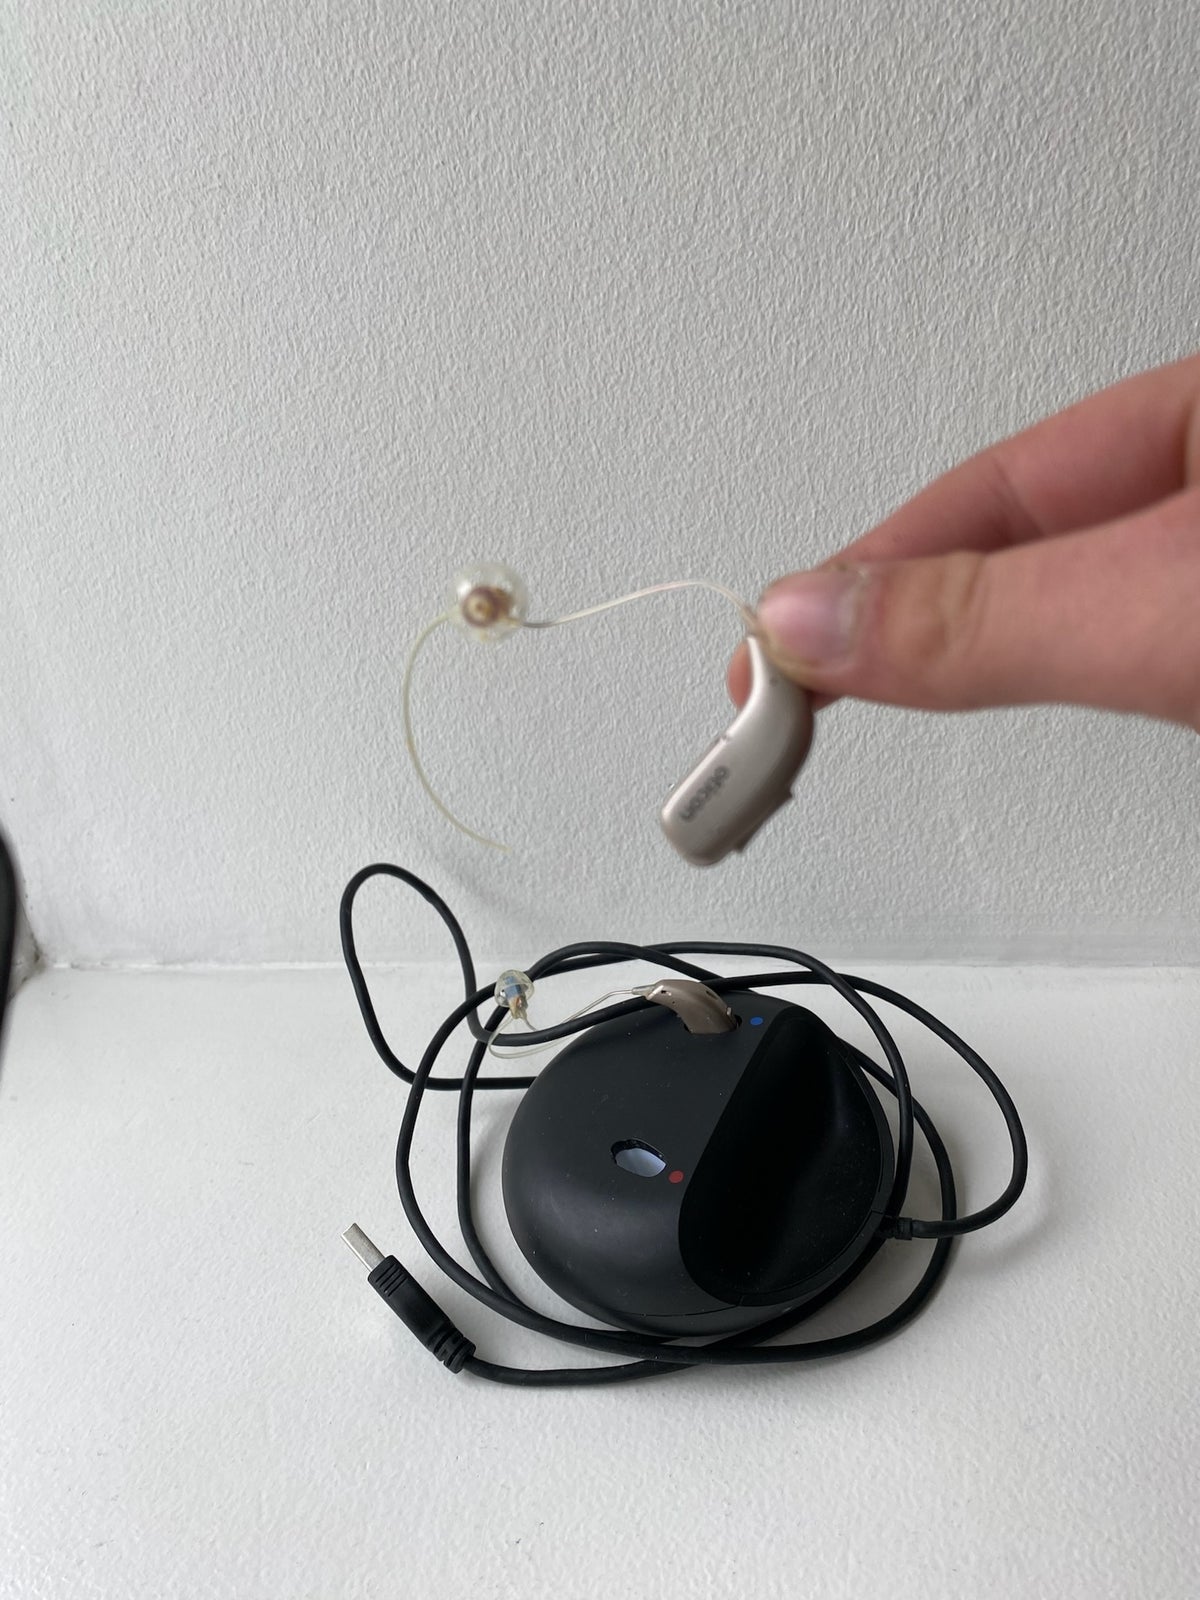 Høreapparat, Oticon MiniRITE